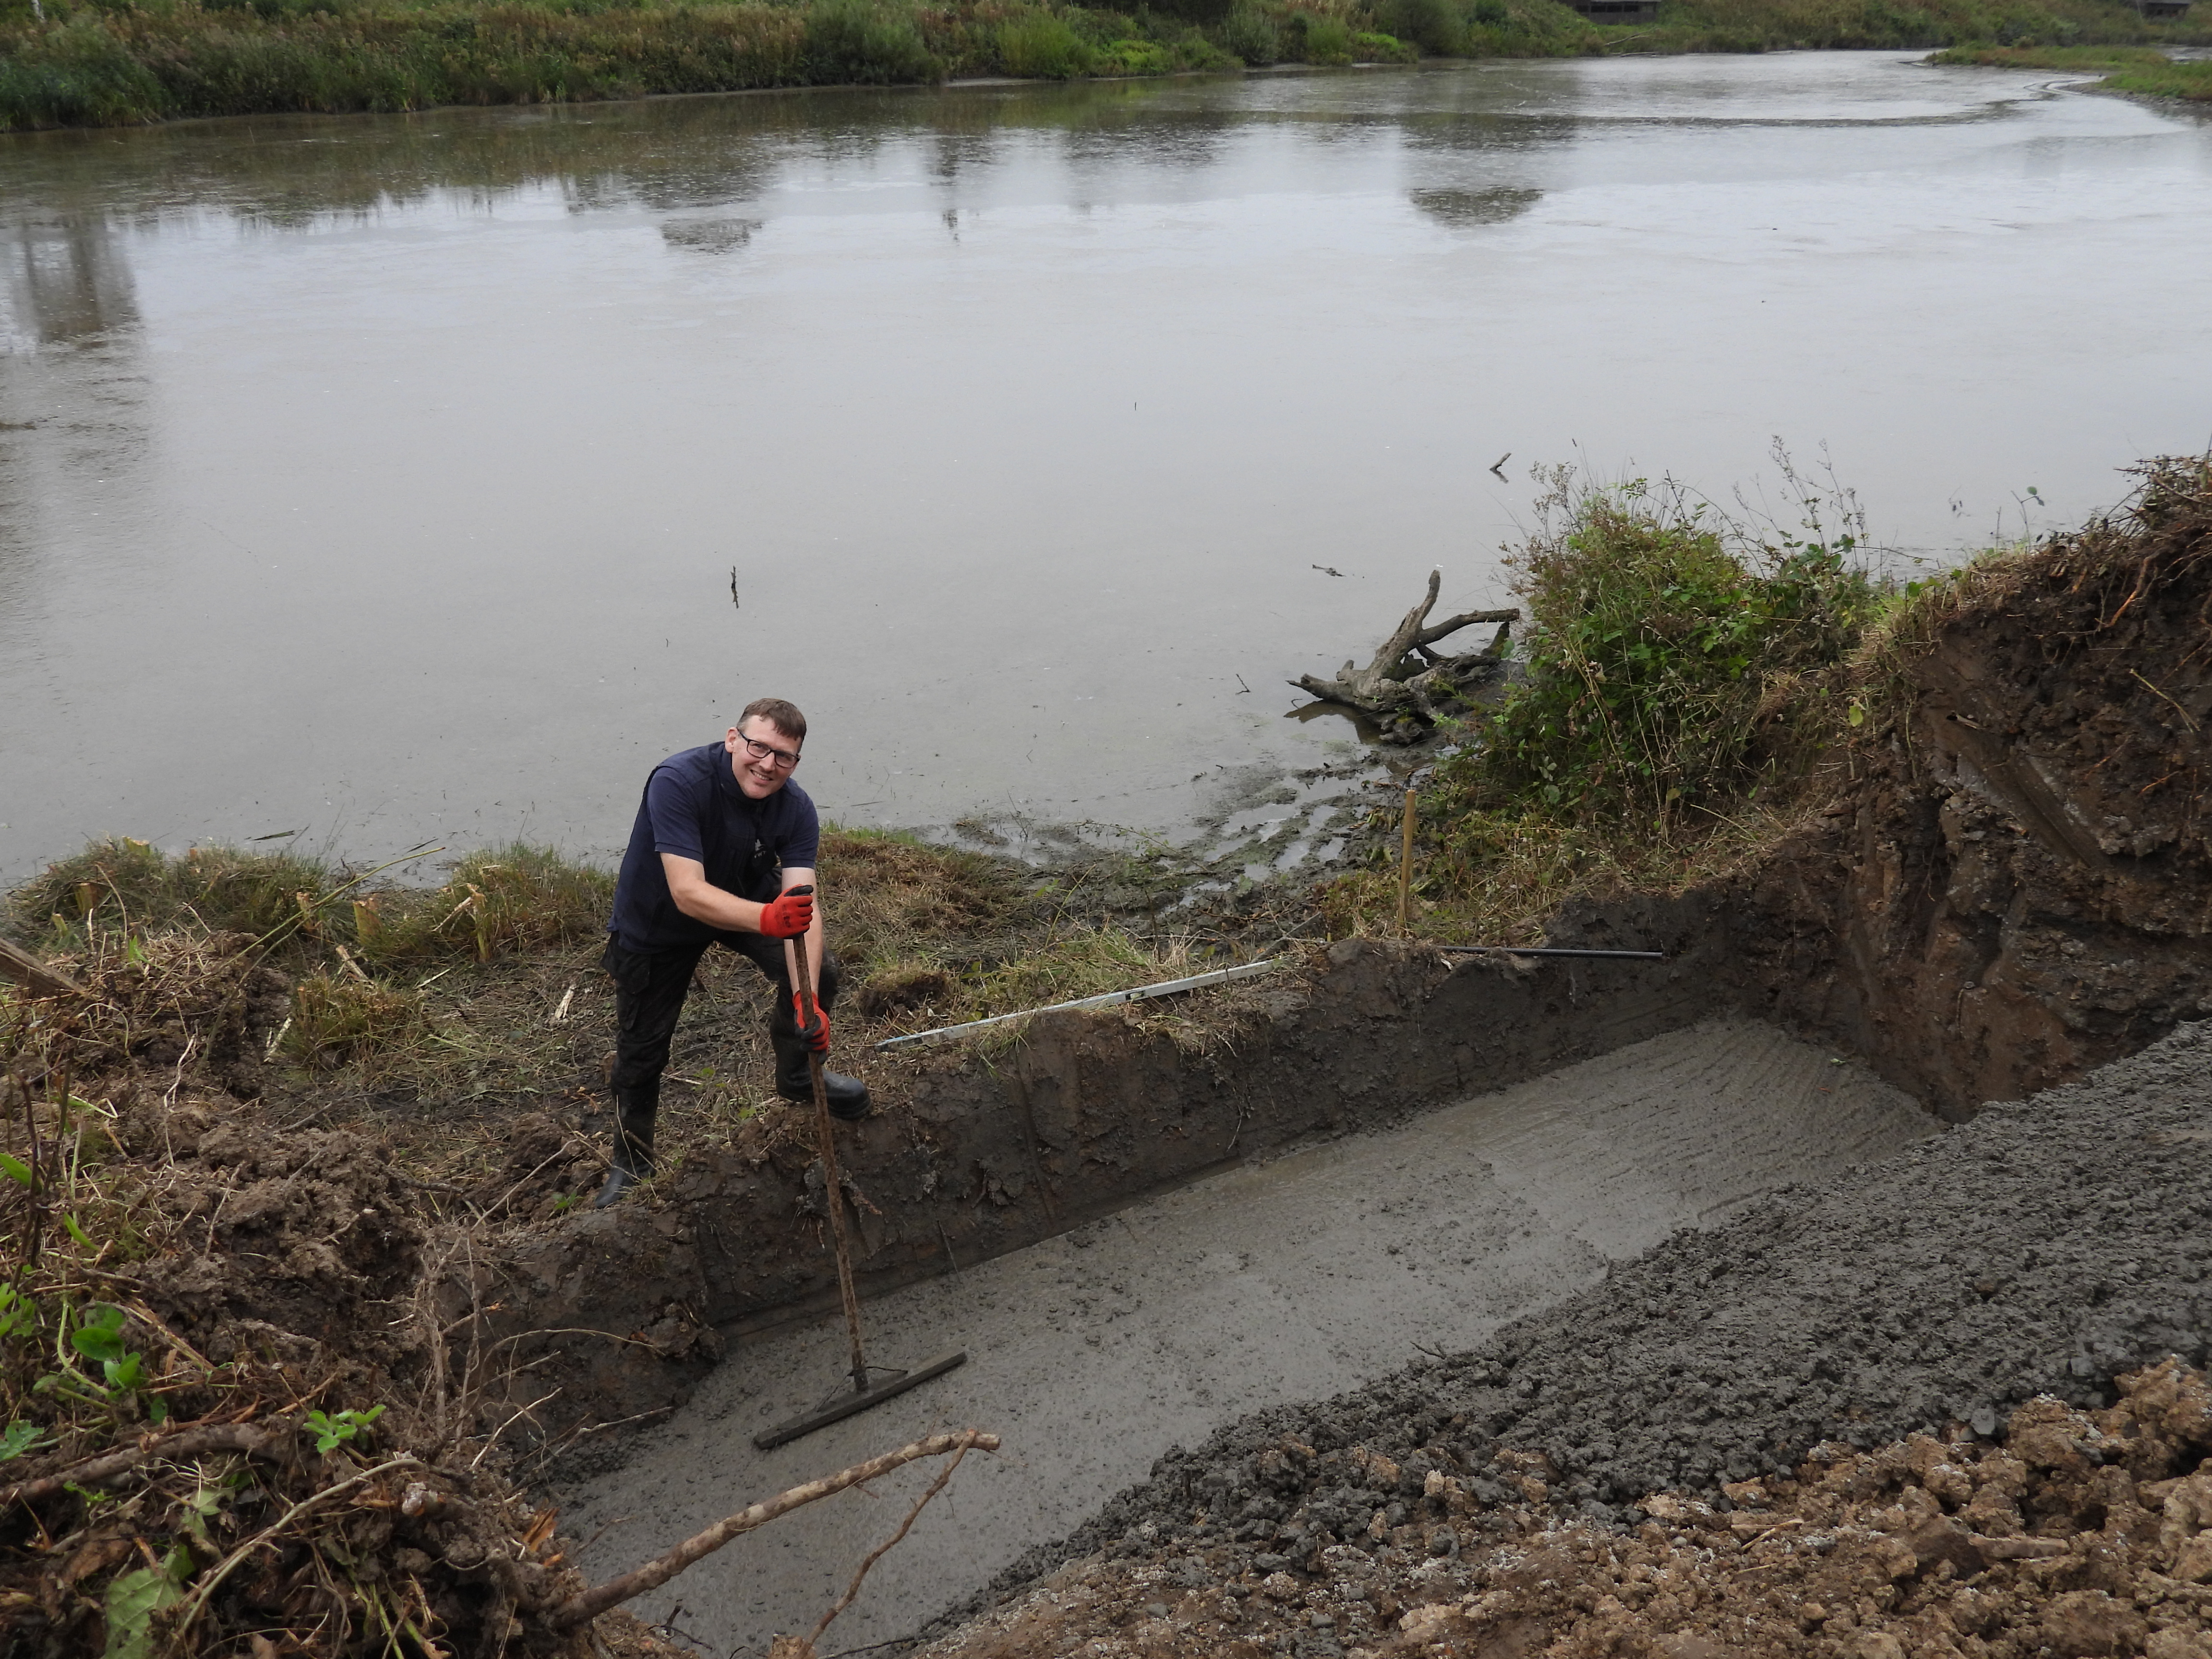 Reserve warden digging rectangular hole on the banks of a large pond or river.